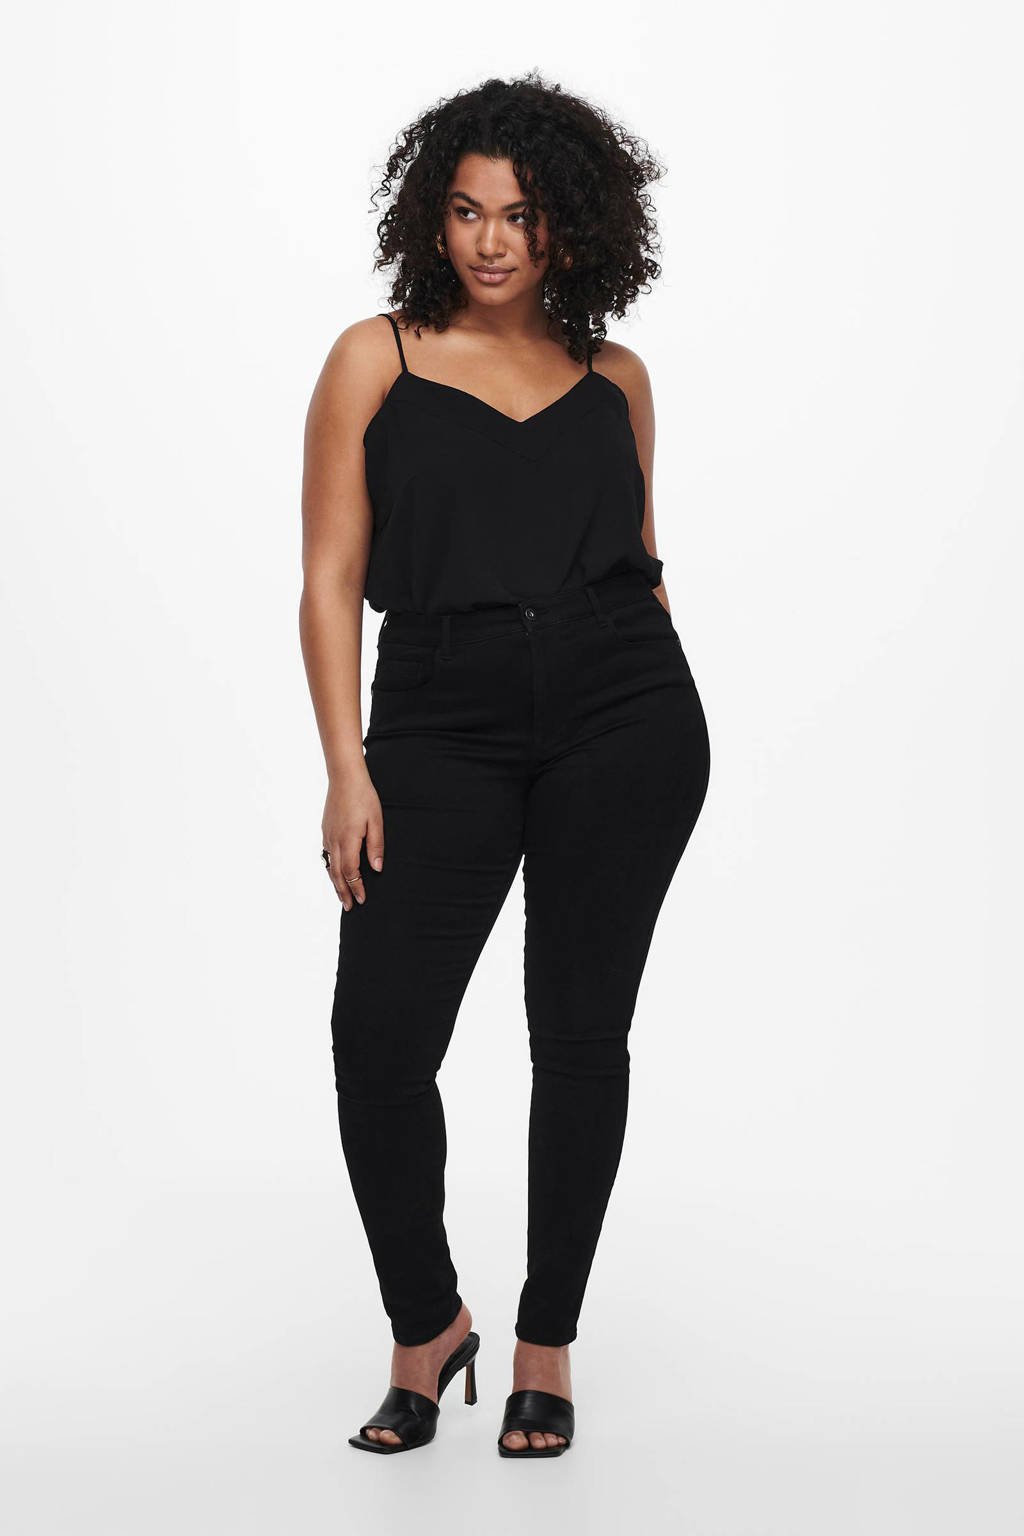 CARAUGUSTA wehkamp skinny ONLY waist zwart high jeans | CARMAKOMA